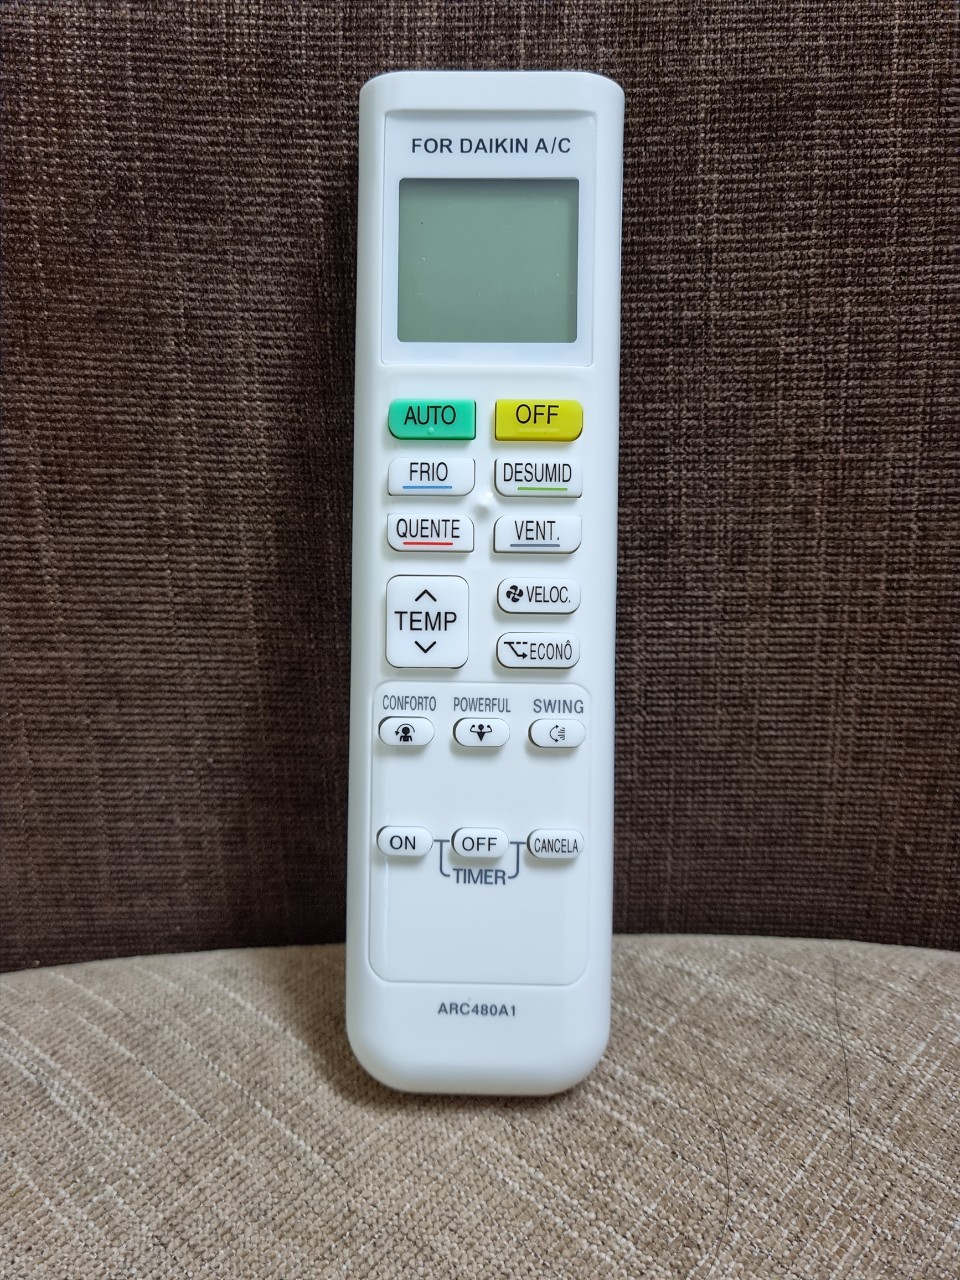 Remote cho máy lạnh Daikin/Điều khiển cho điều hòa Daikin